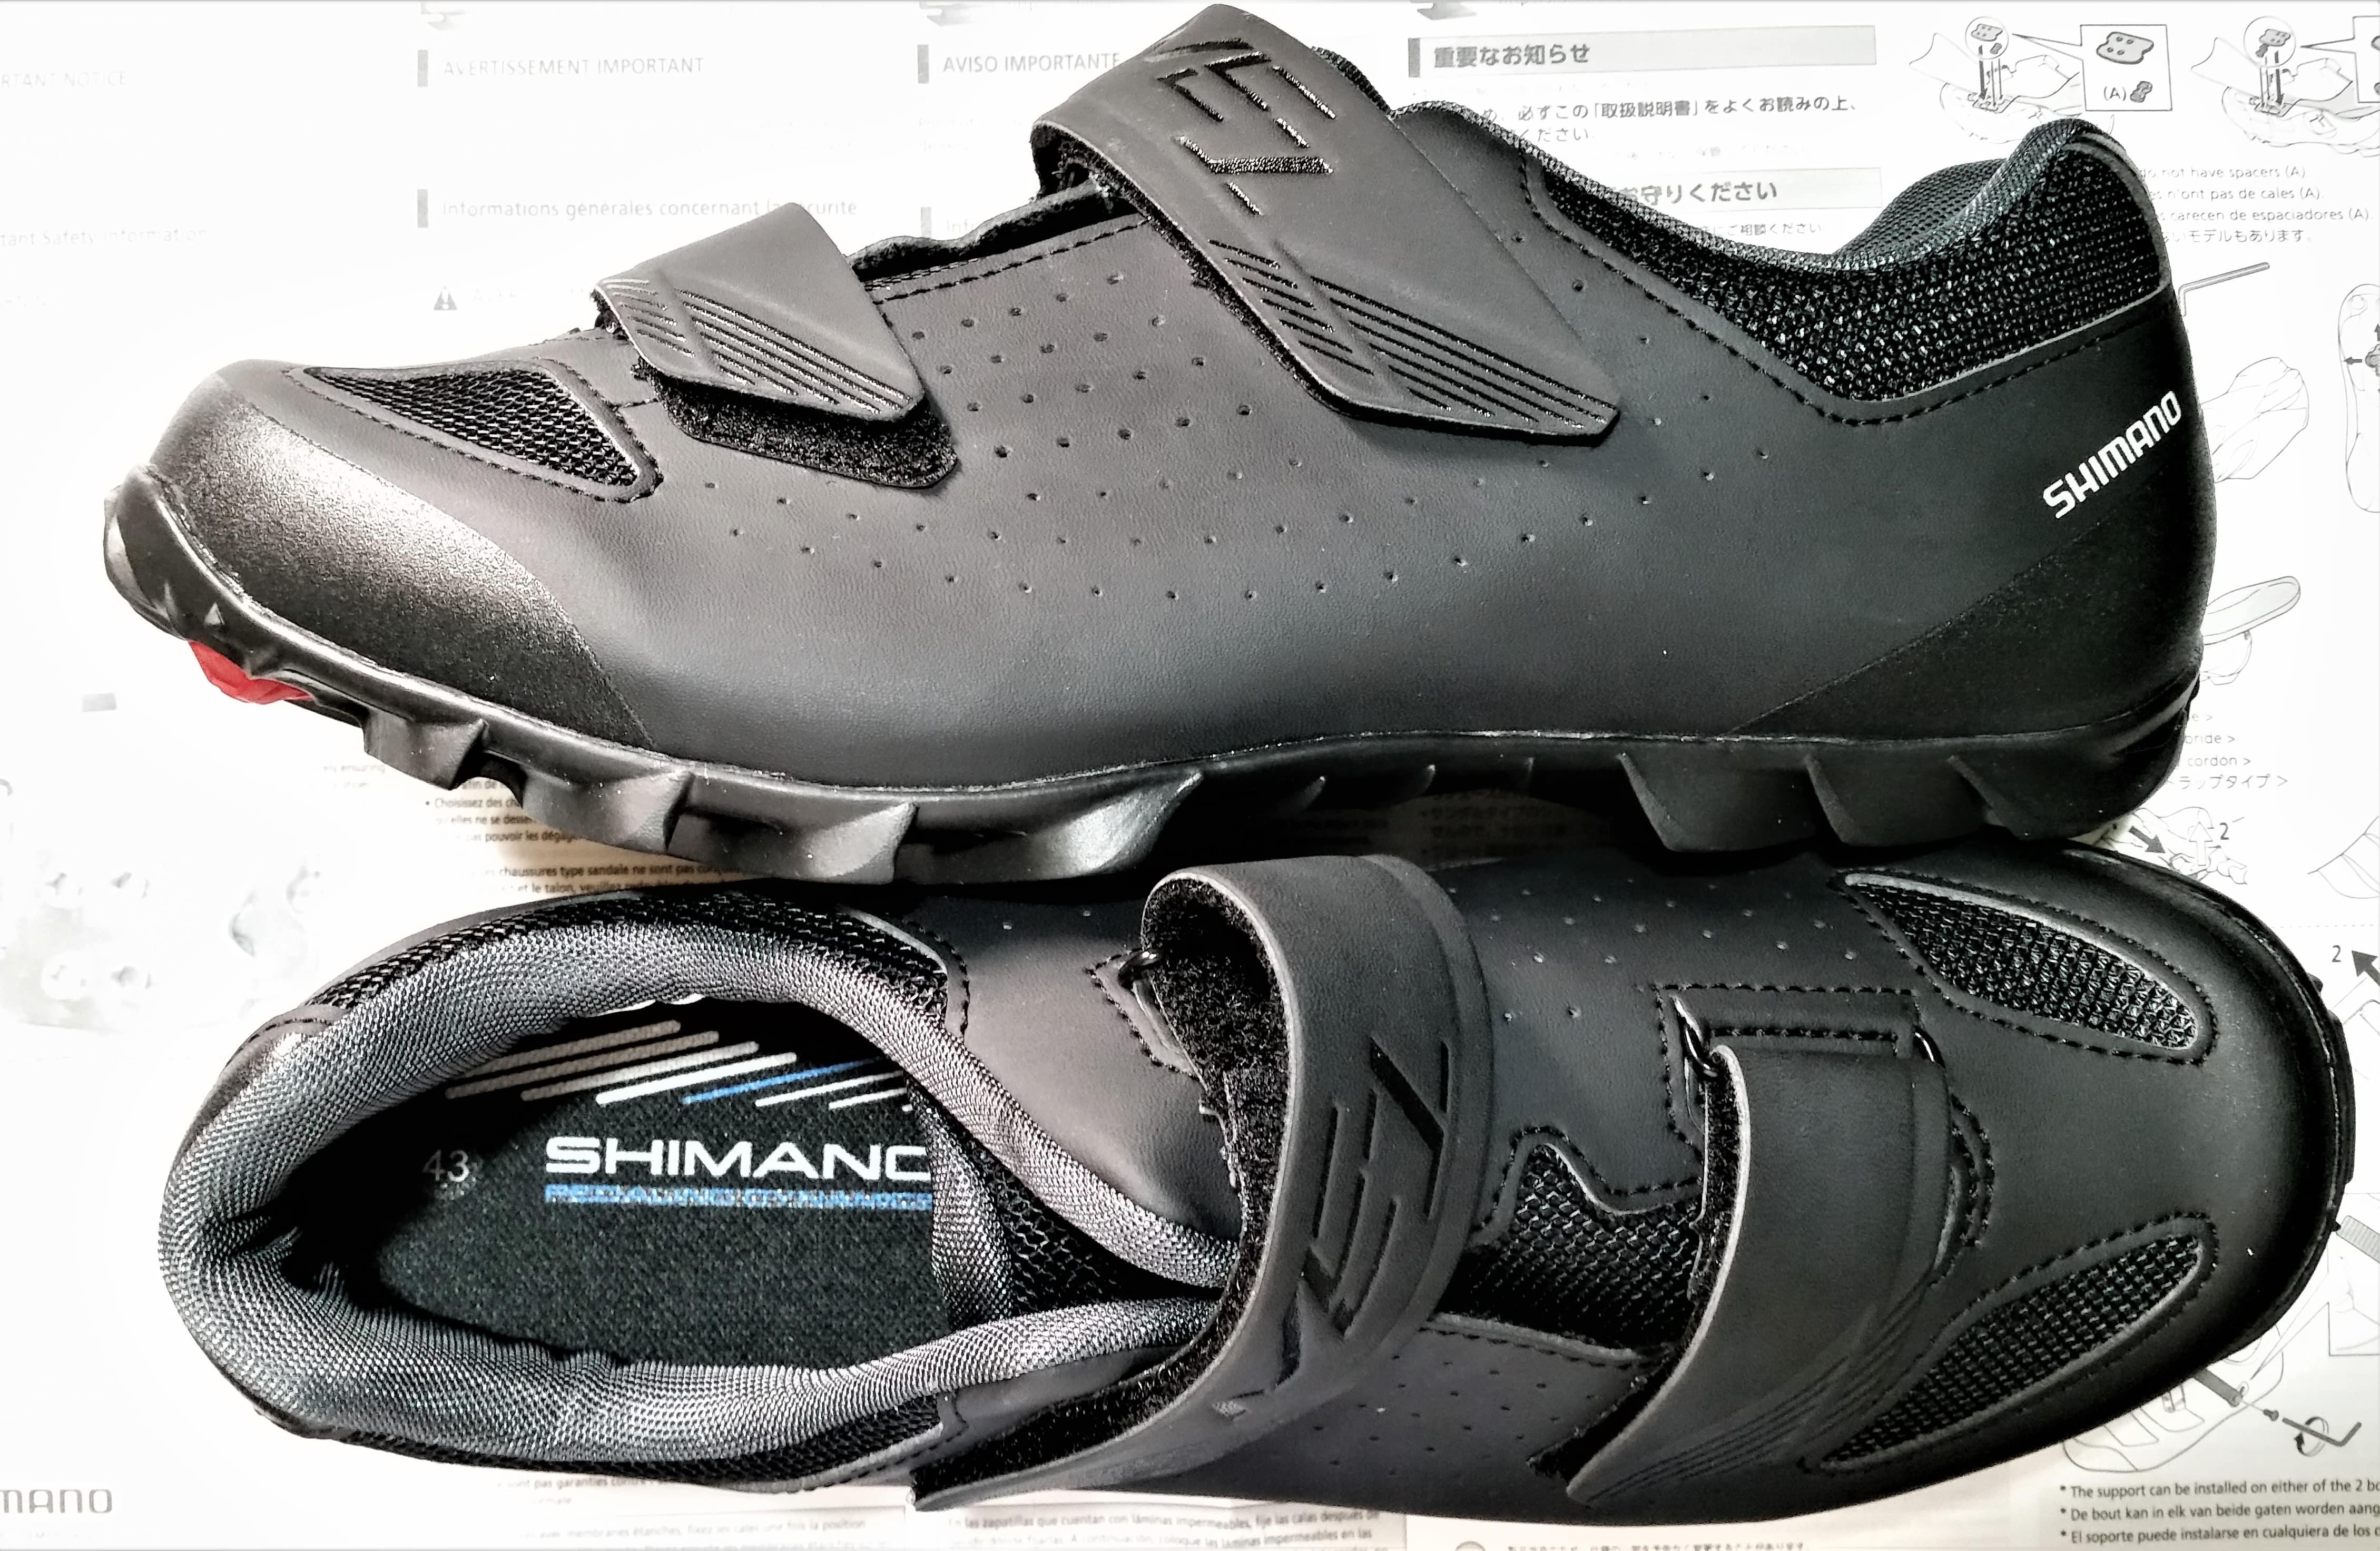 shimano mtb bike shoes